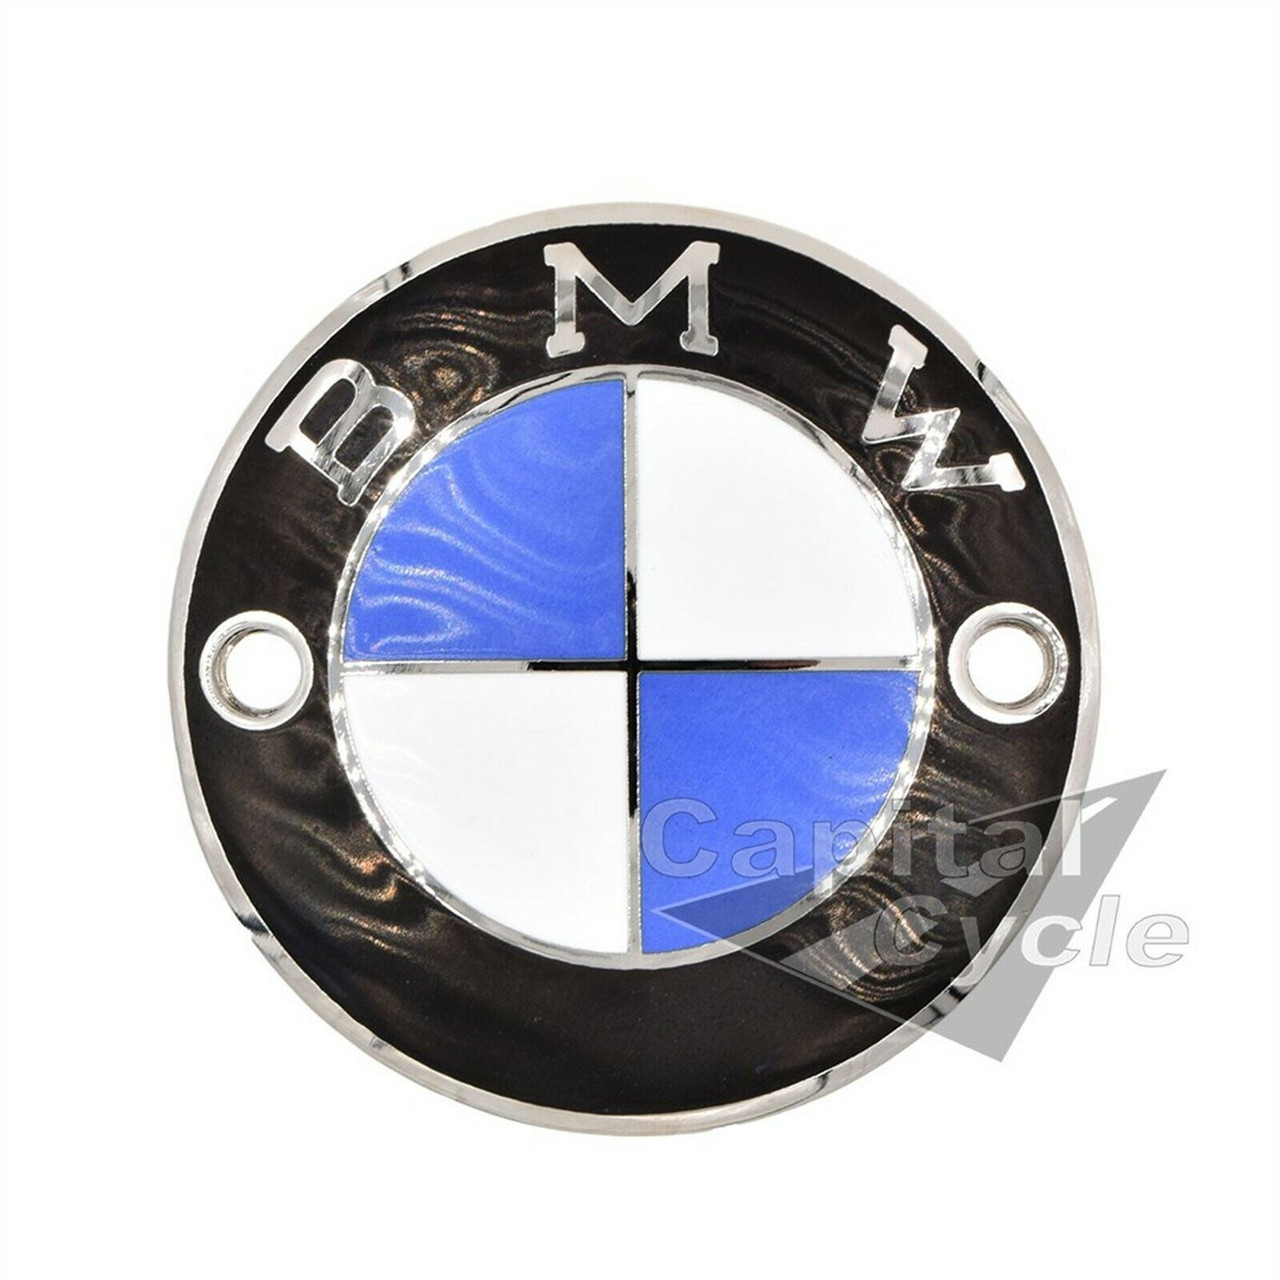 BMW Emblem - Enamel Tank Badge Letter Style